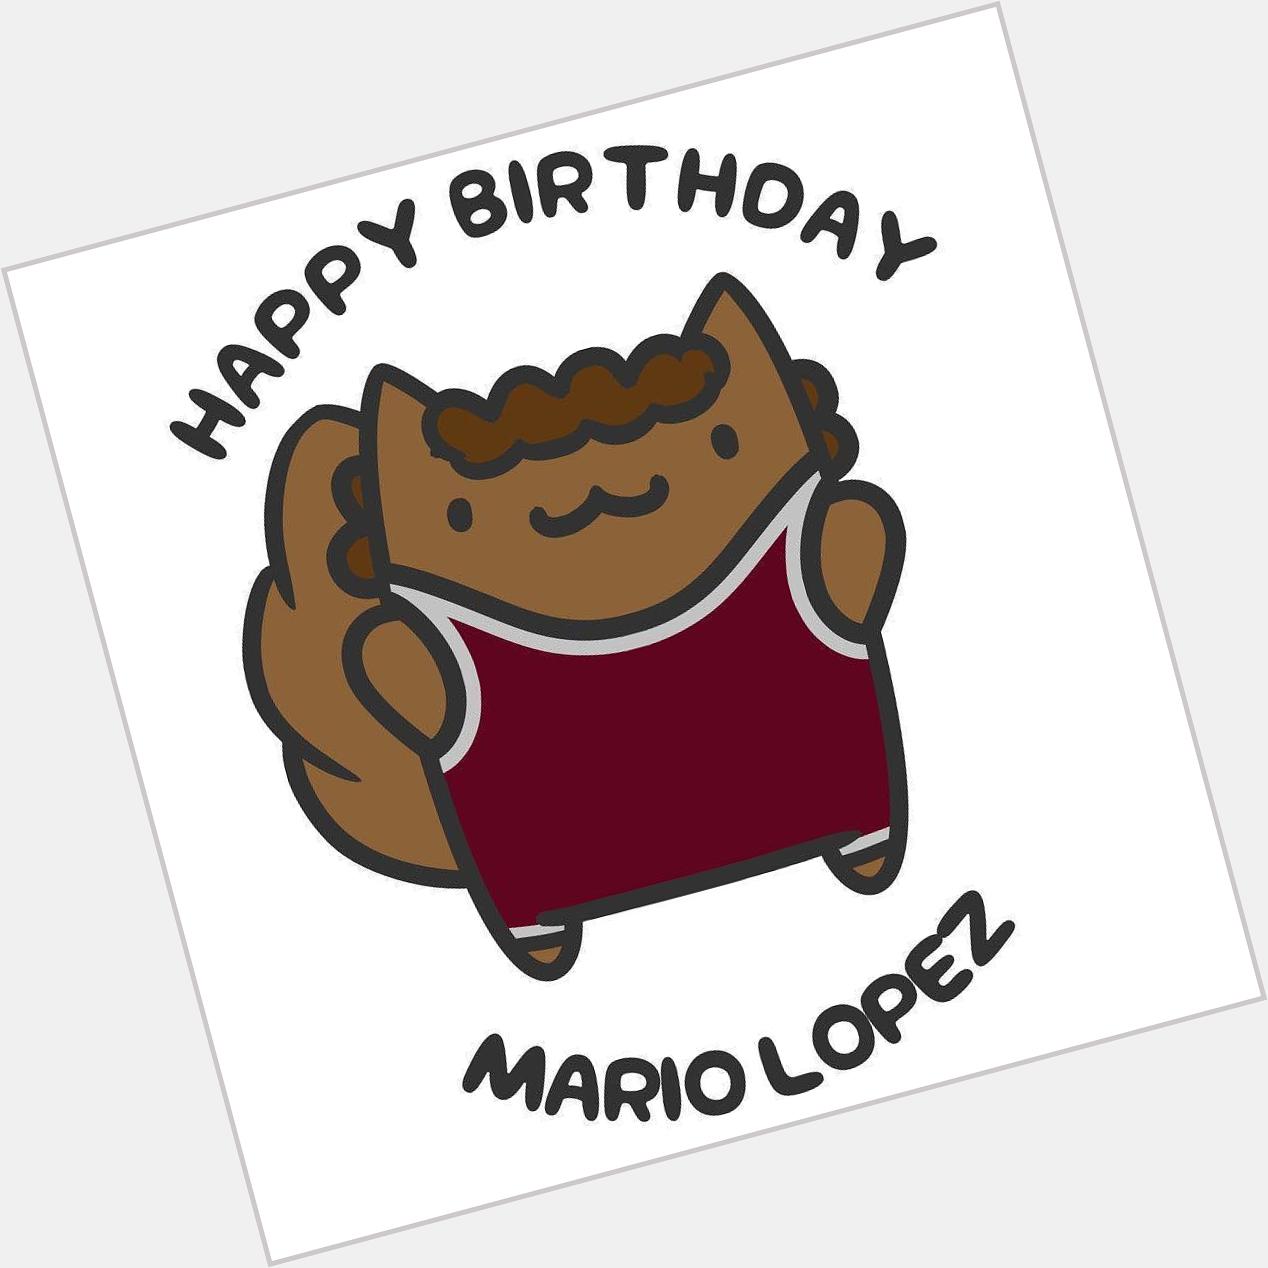 Happy Birthday, Mario Lopez! I was always on Team Slater  